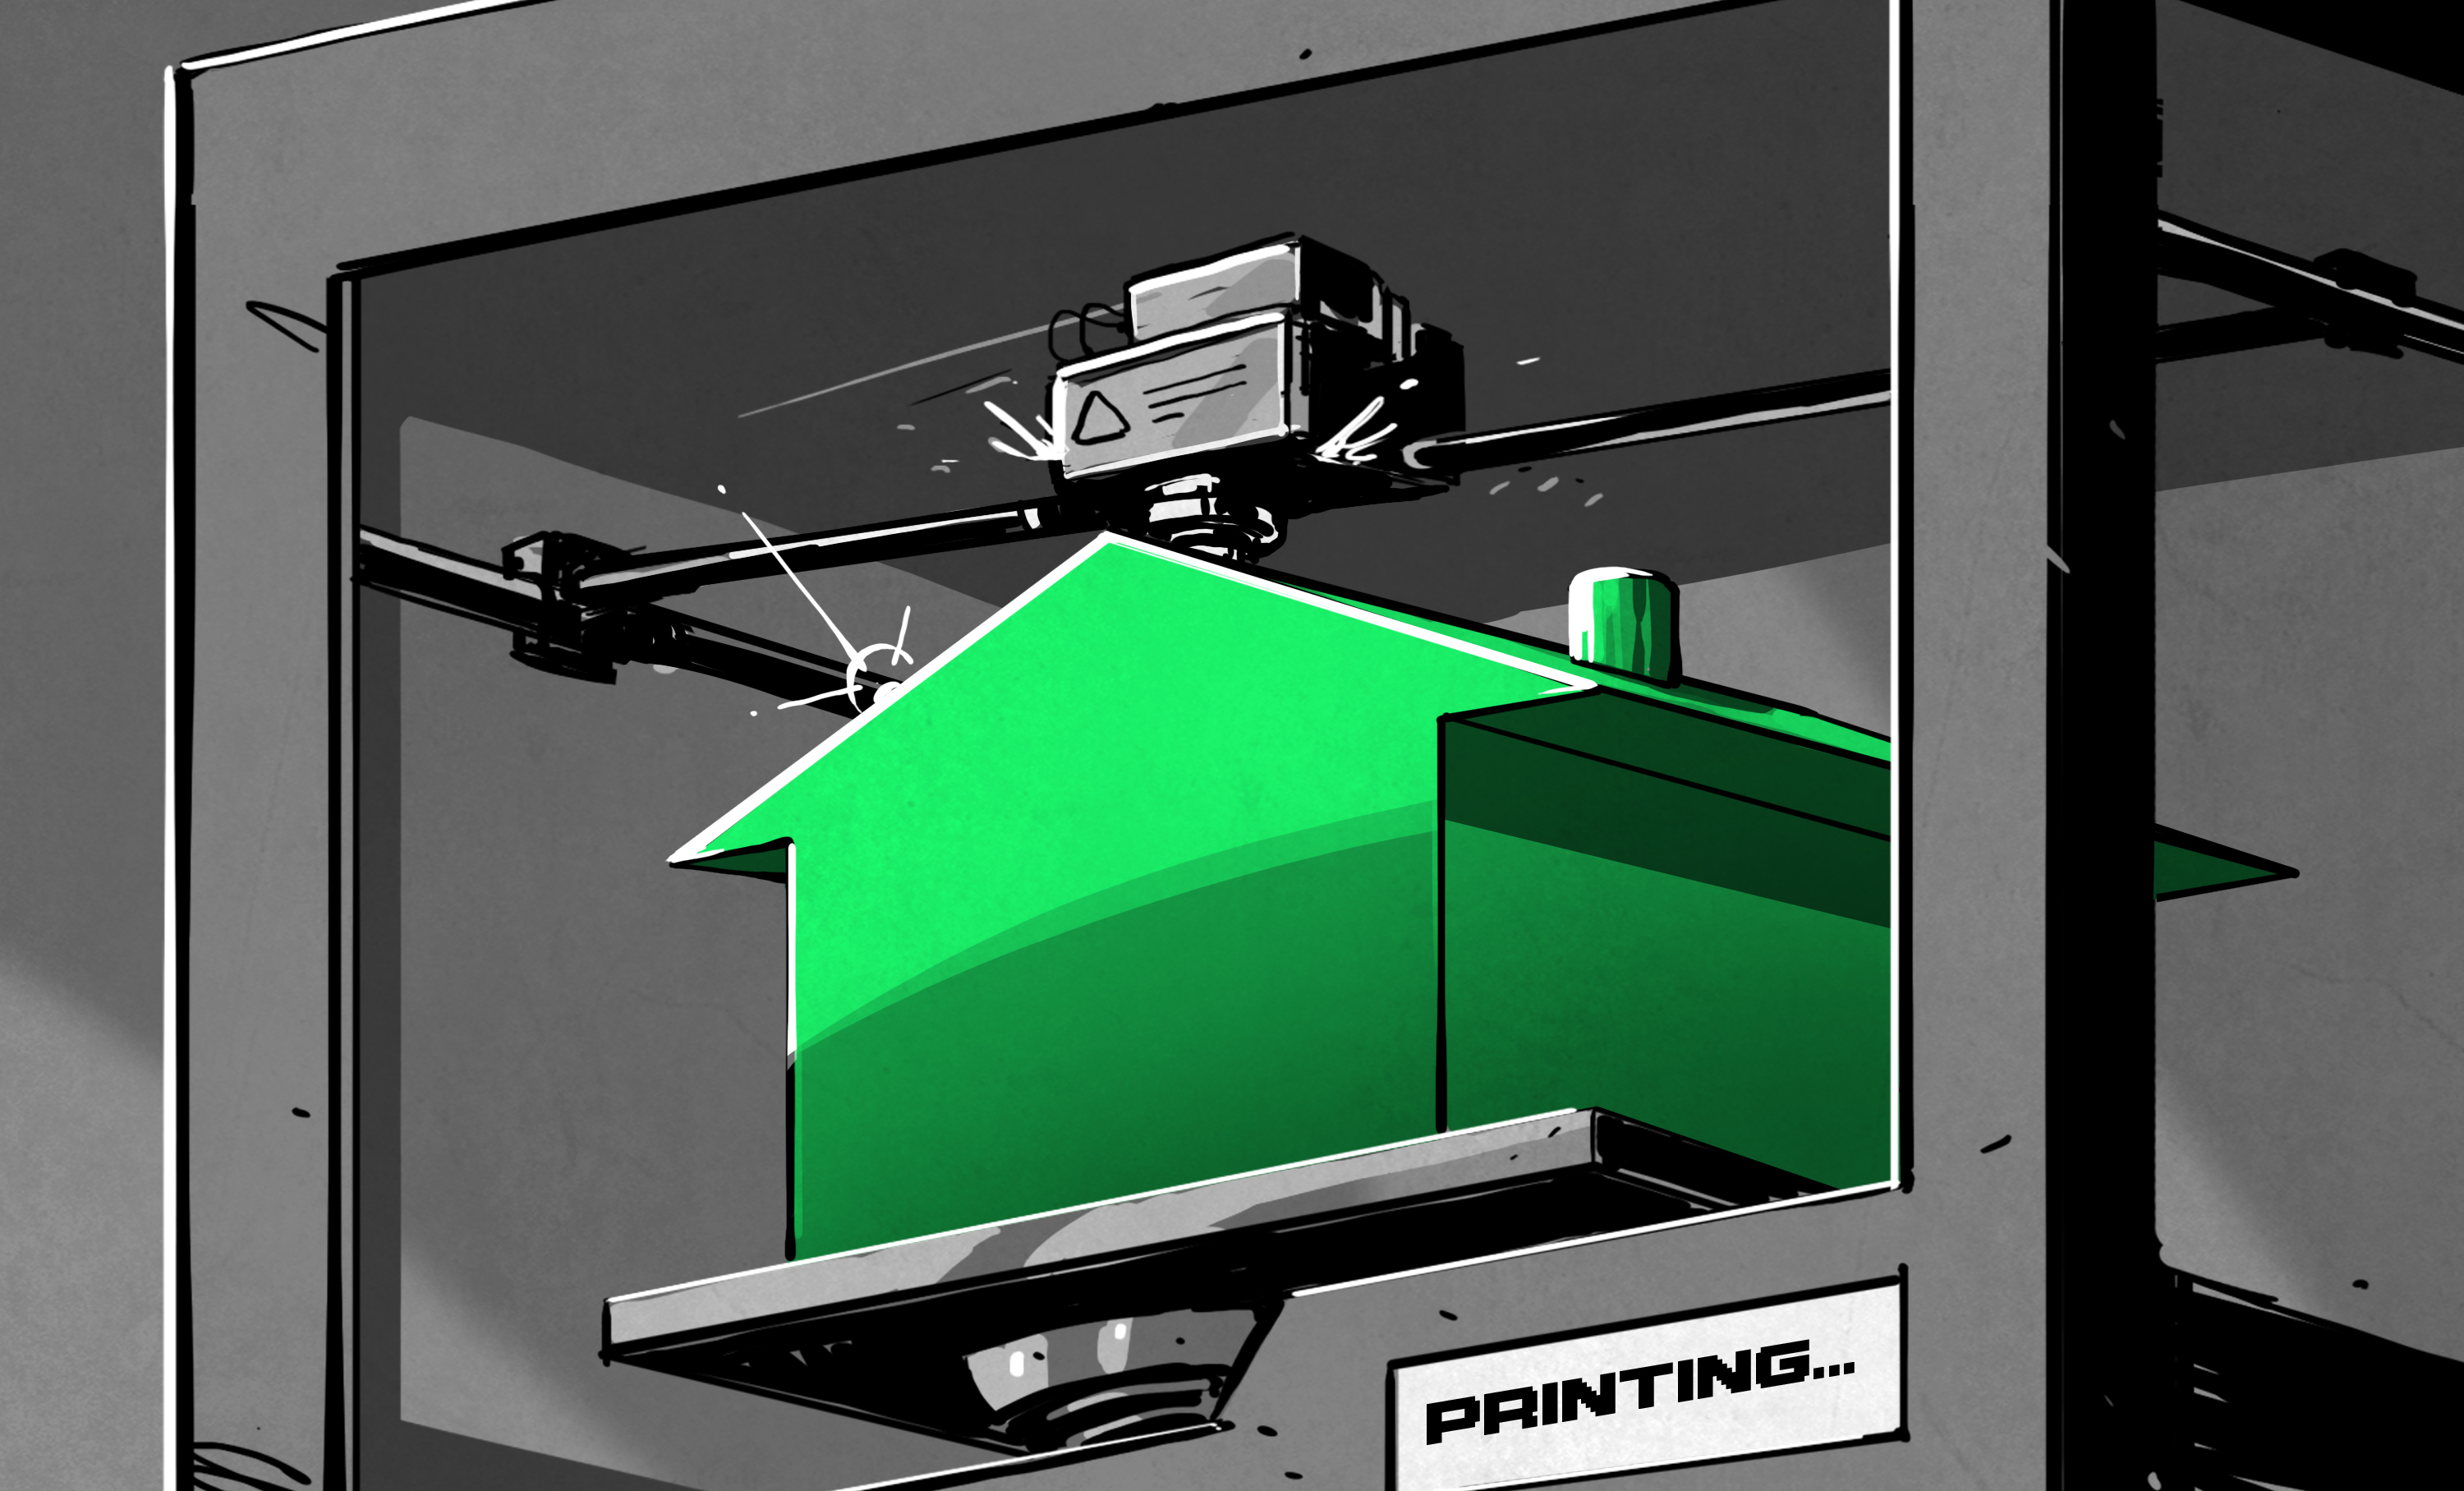 Does 3D-printing houses make sense? - by Lloyd Alter